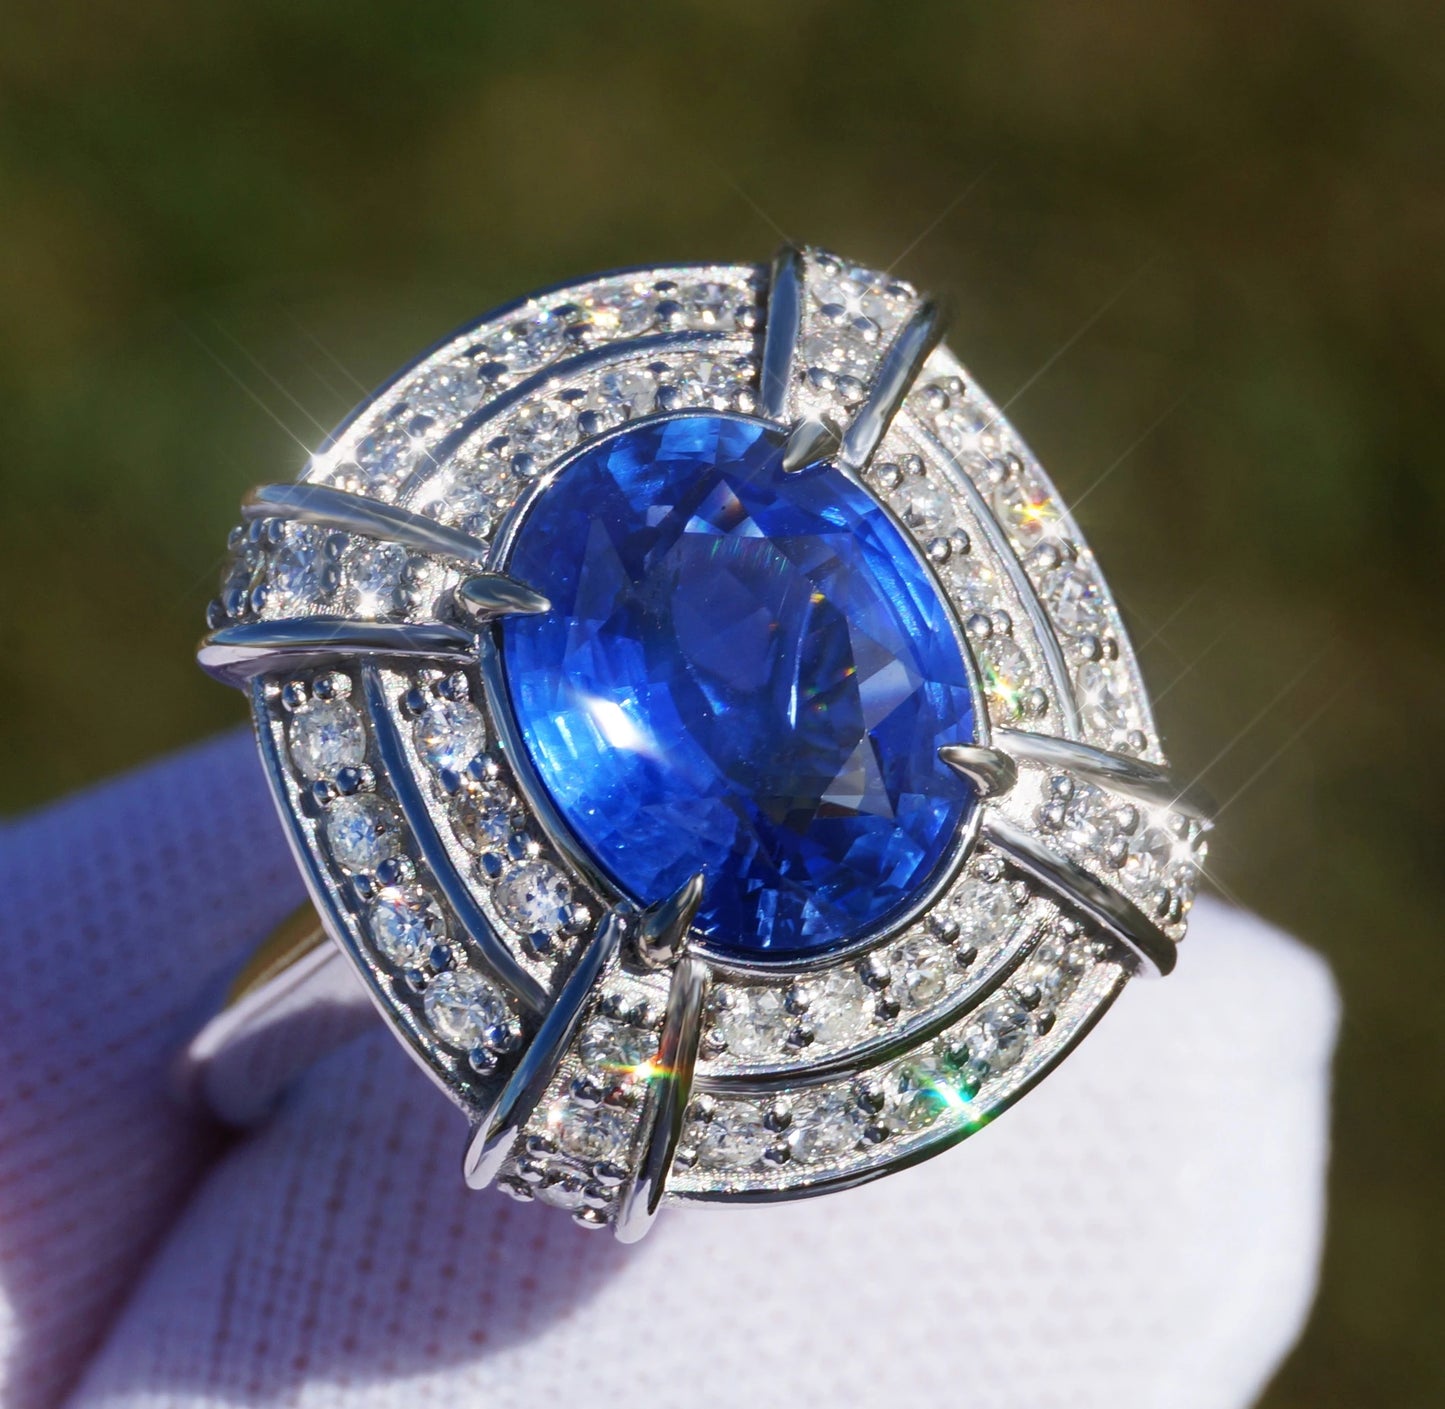 Sapphire ring gold white 14k diamond ceylon oval blue gia certified 3.87ctw